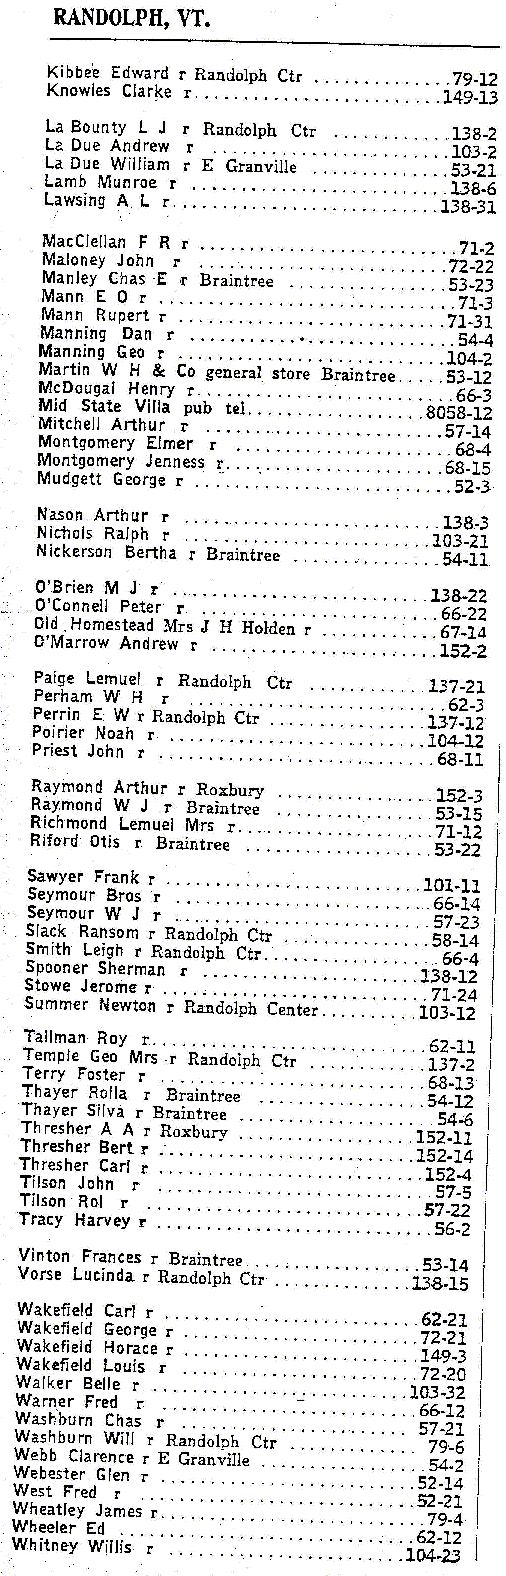 1928 Randolph Vt Telephone Book - Page 50